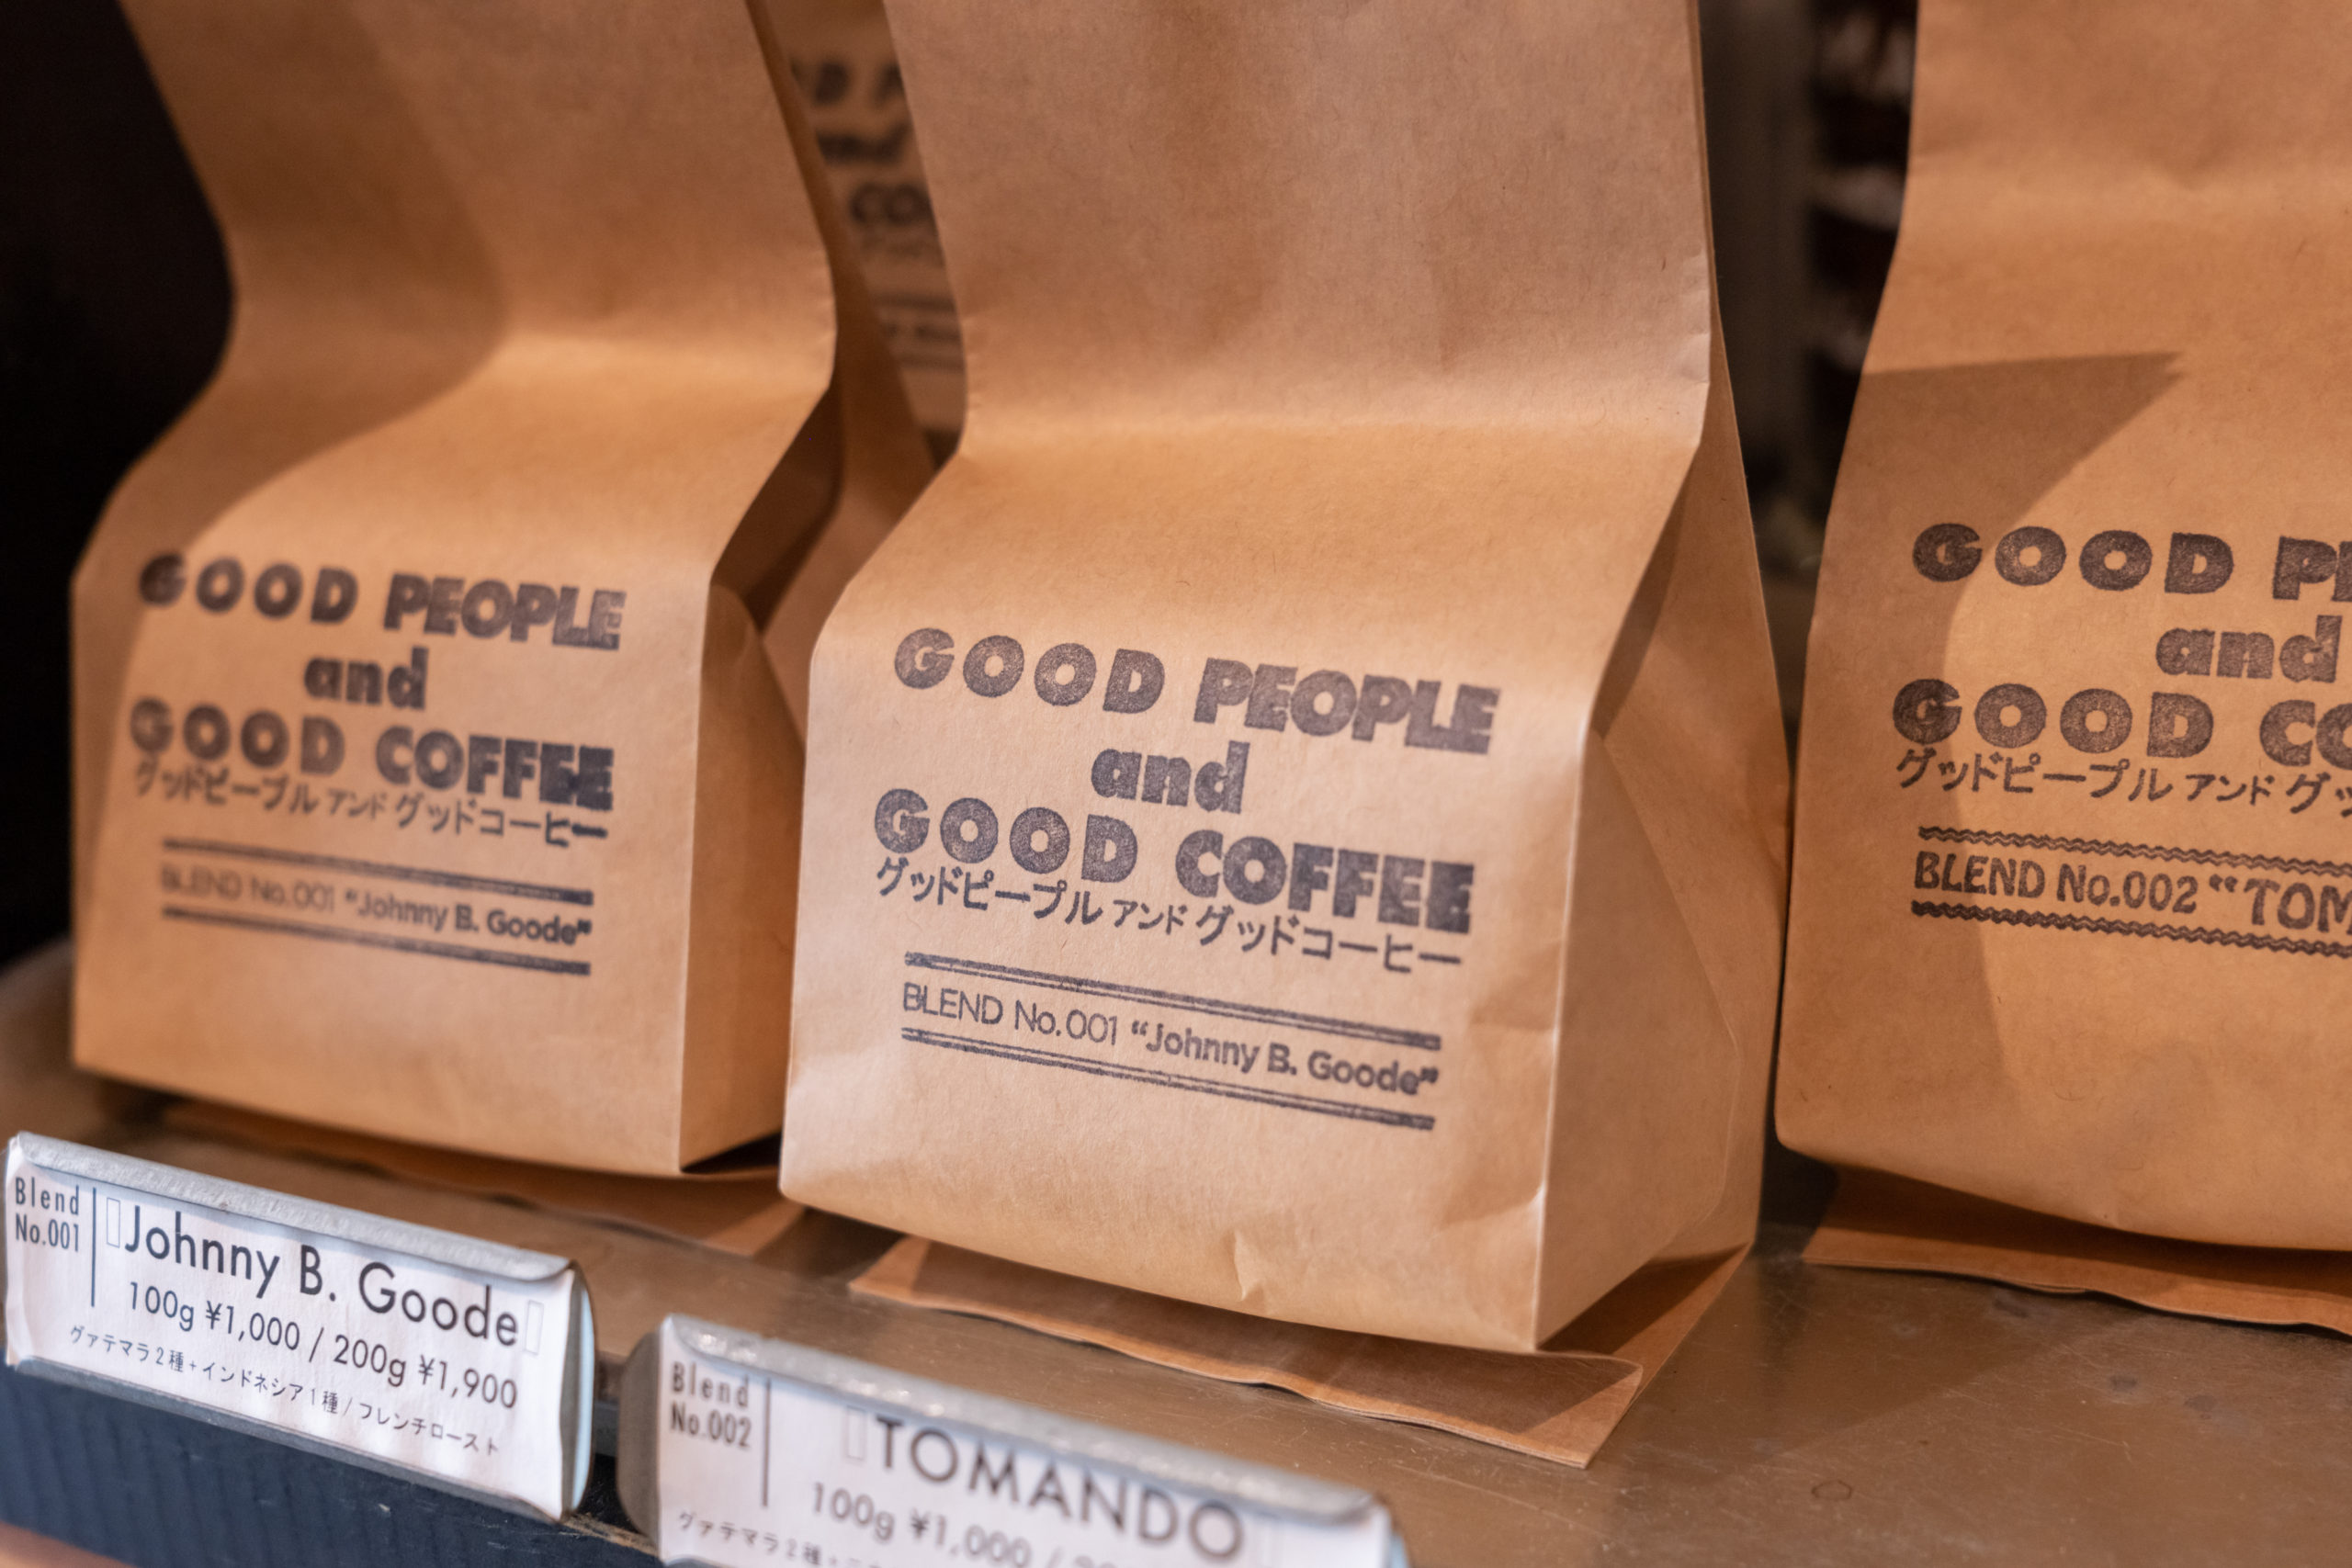 Good People & Good Coffee